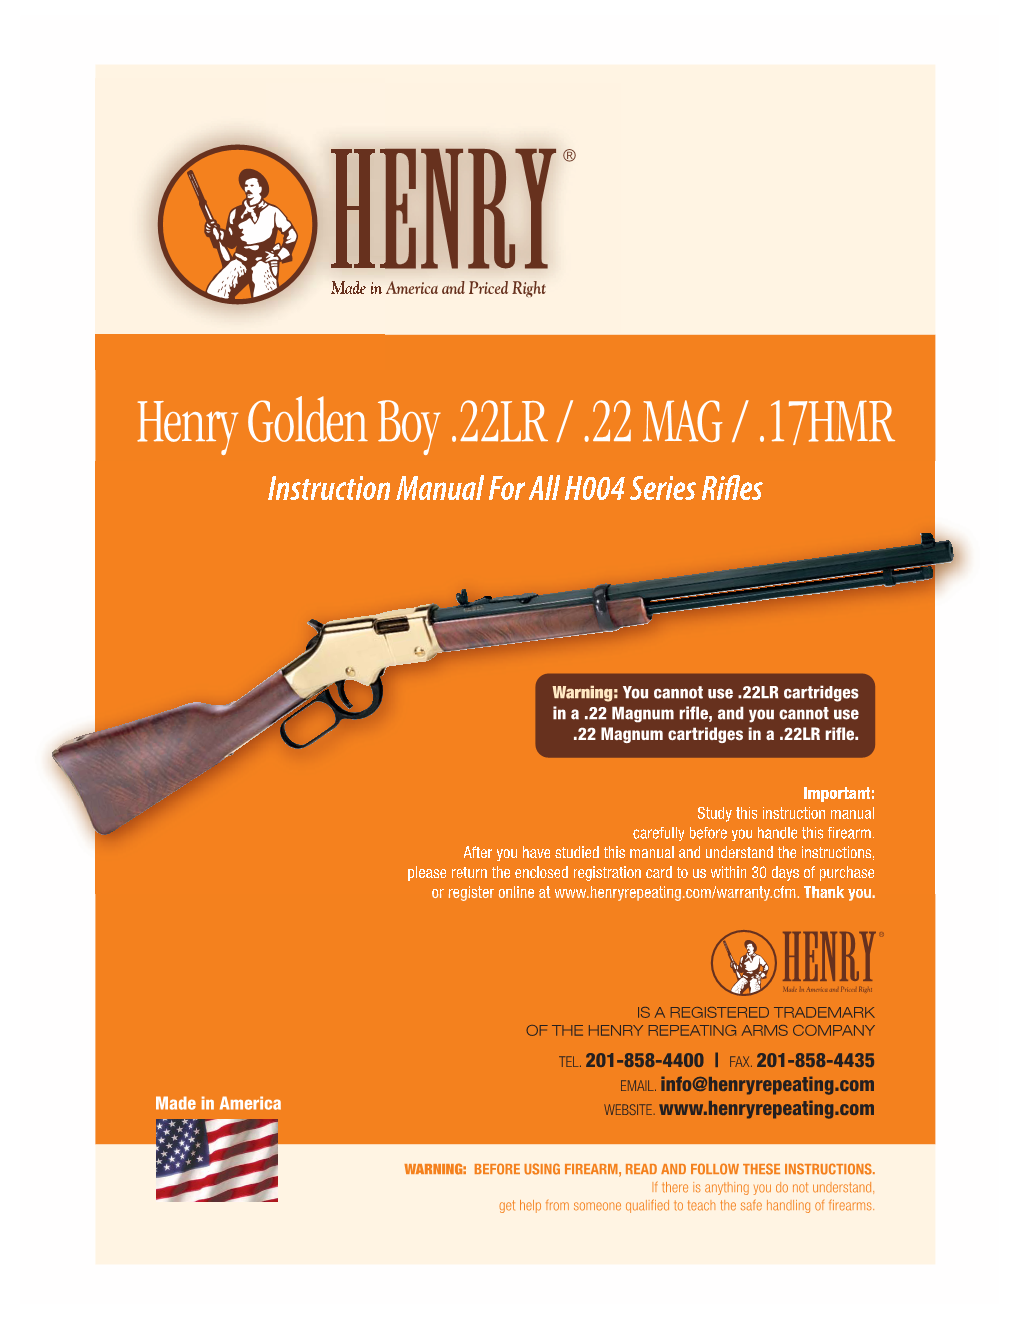 Henry Golden Boy Manual